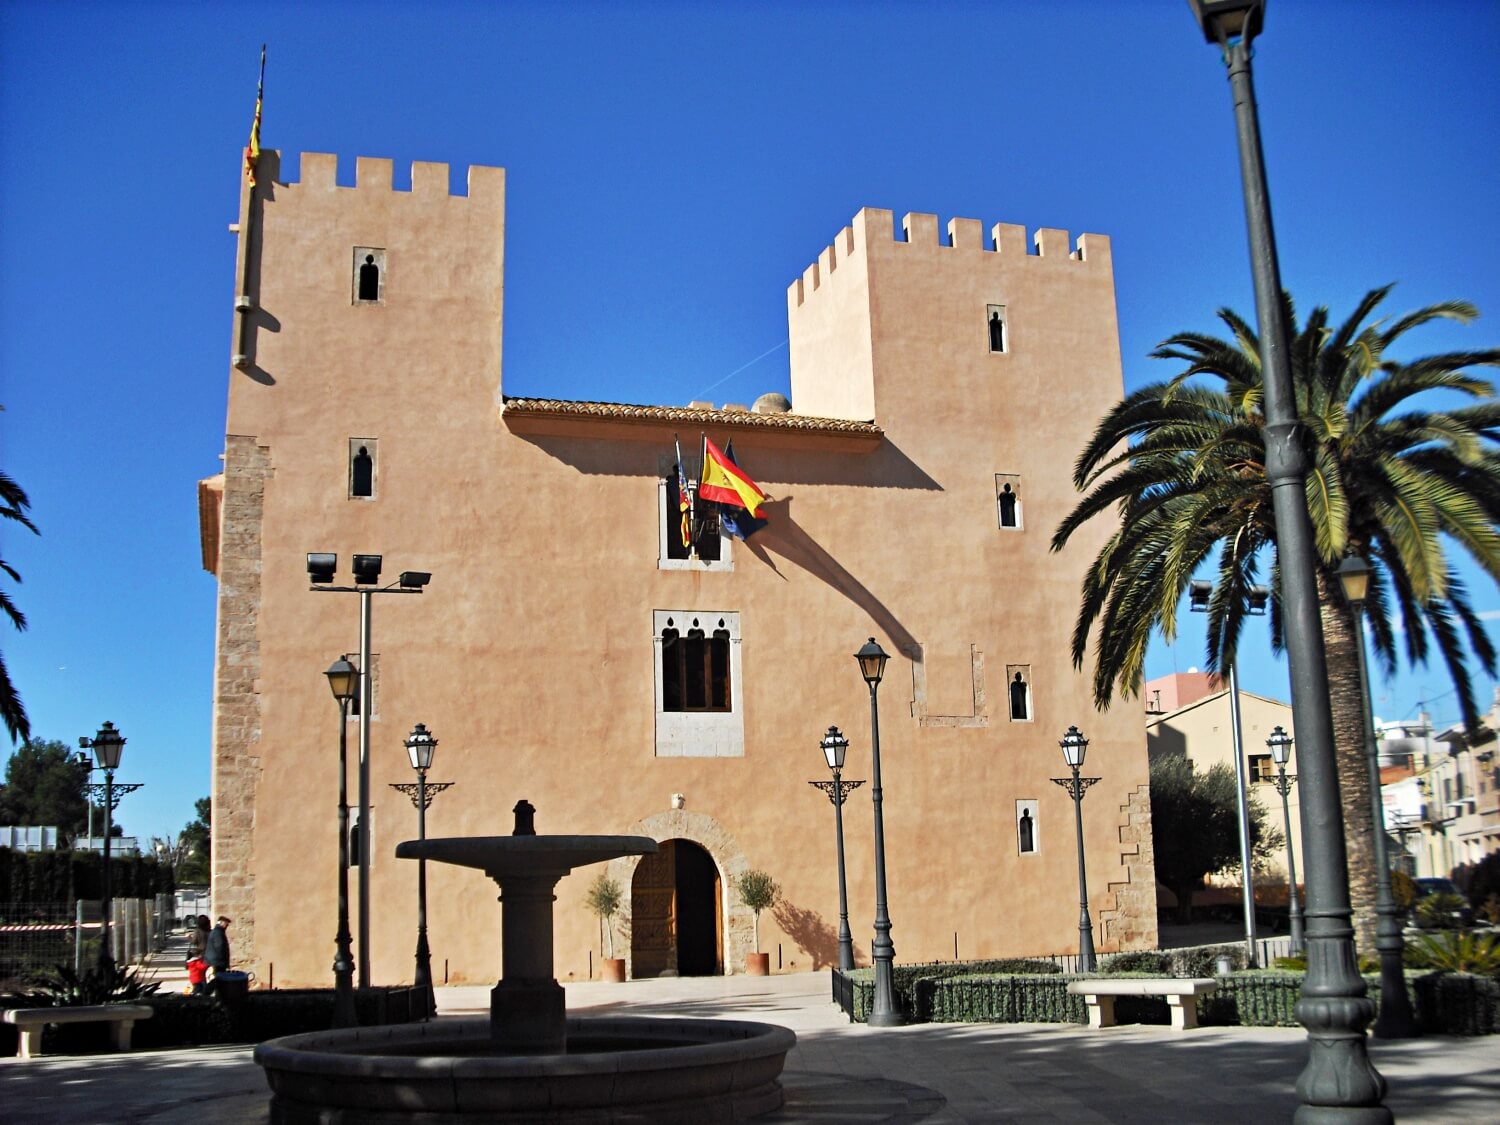 The Palace of Albalat dels Sorells